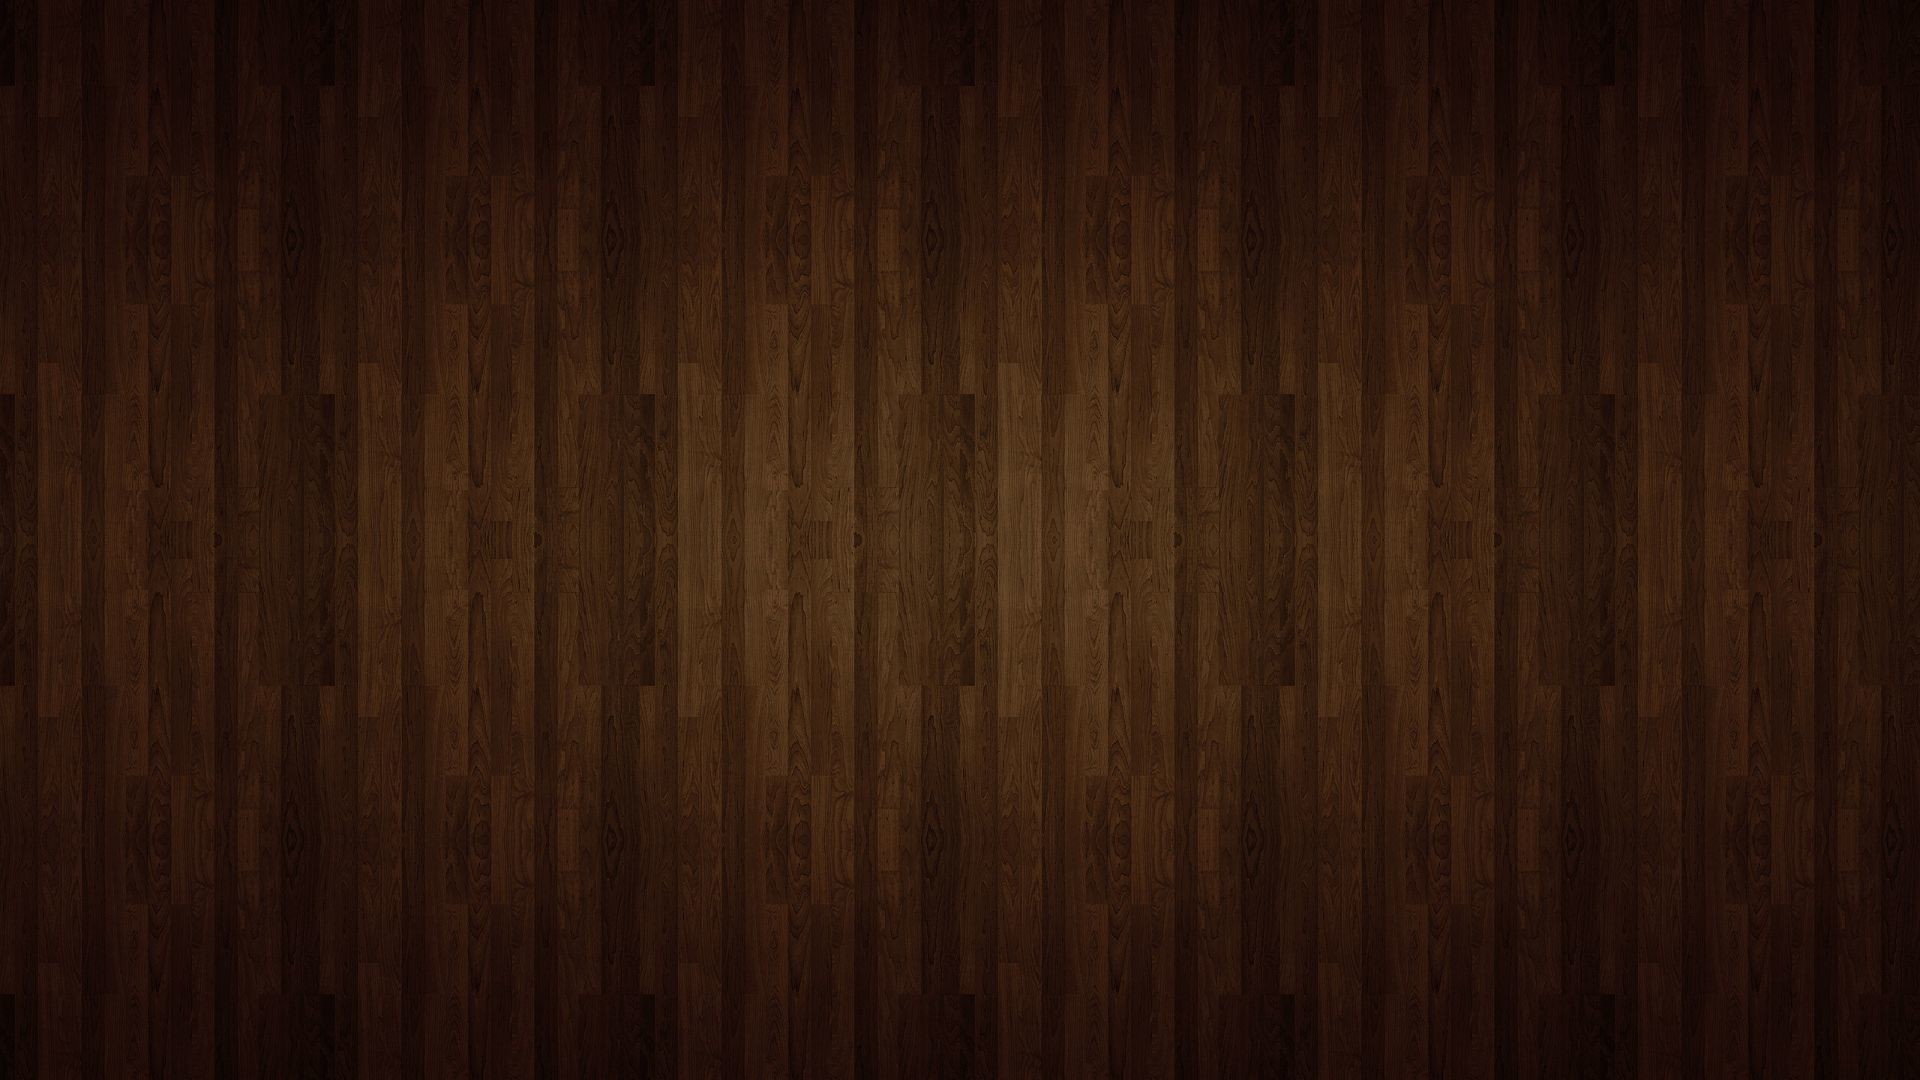 1920x1080 Free Wood Grain Wallpaper Download.